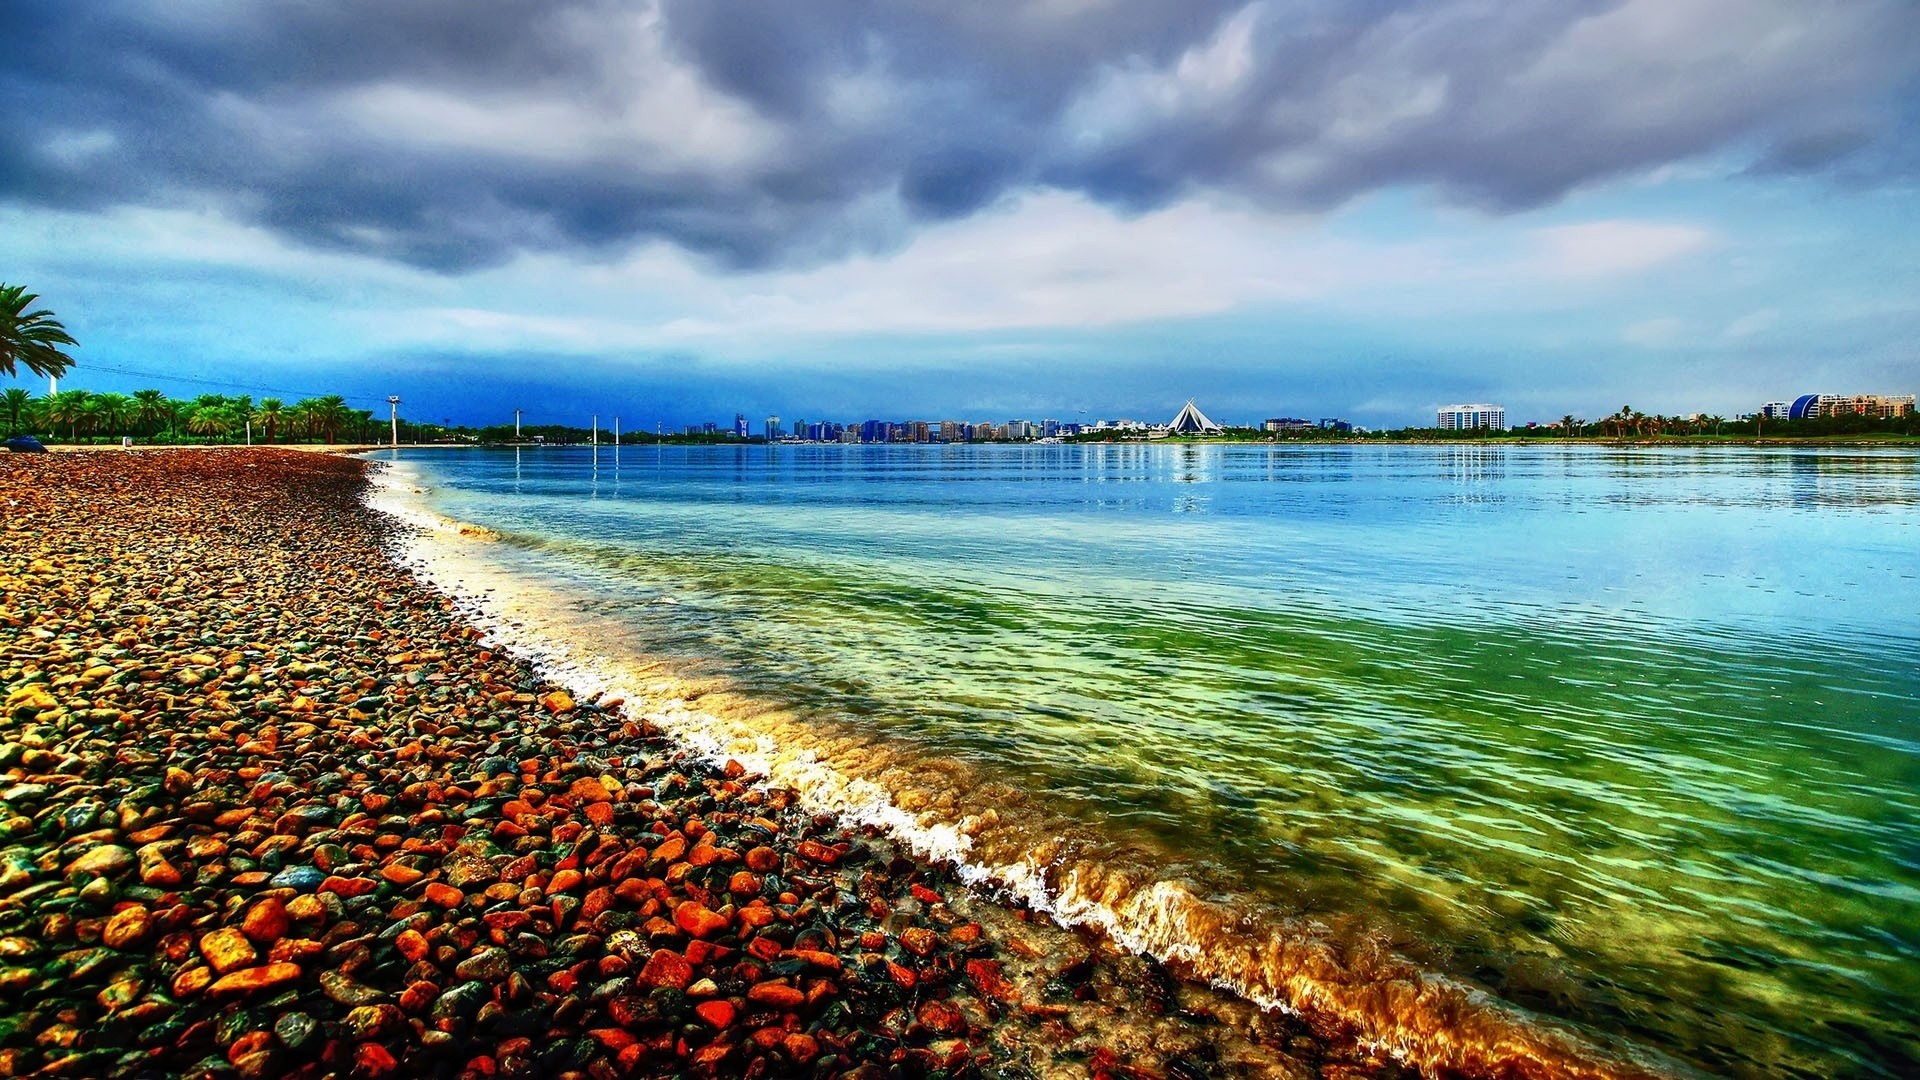 wallpaper hd 1080p free download,sky,natural landscape,nature,water,shore